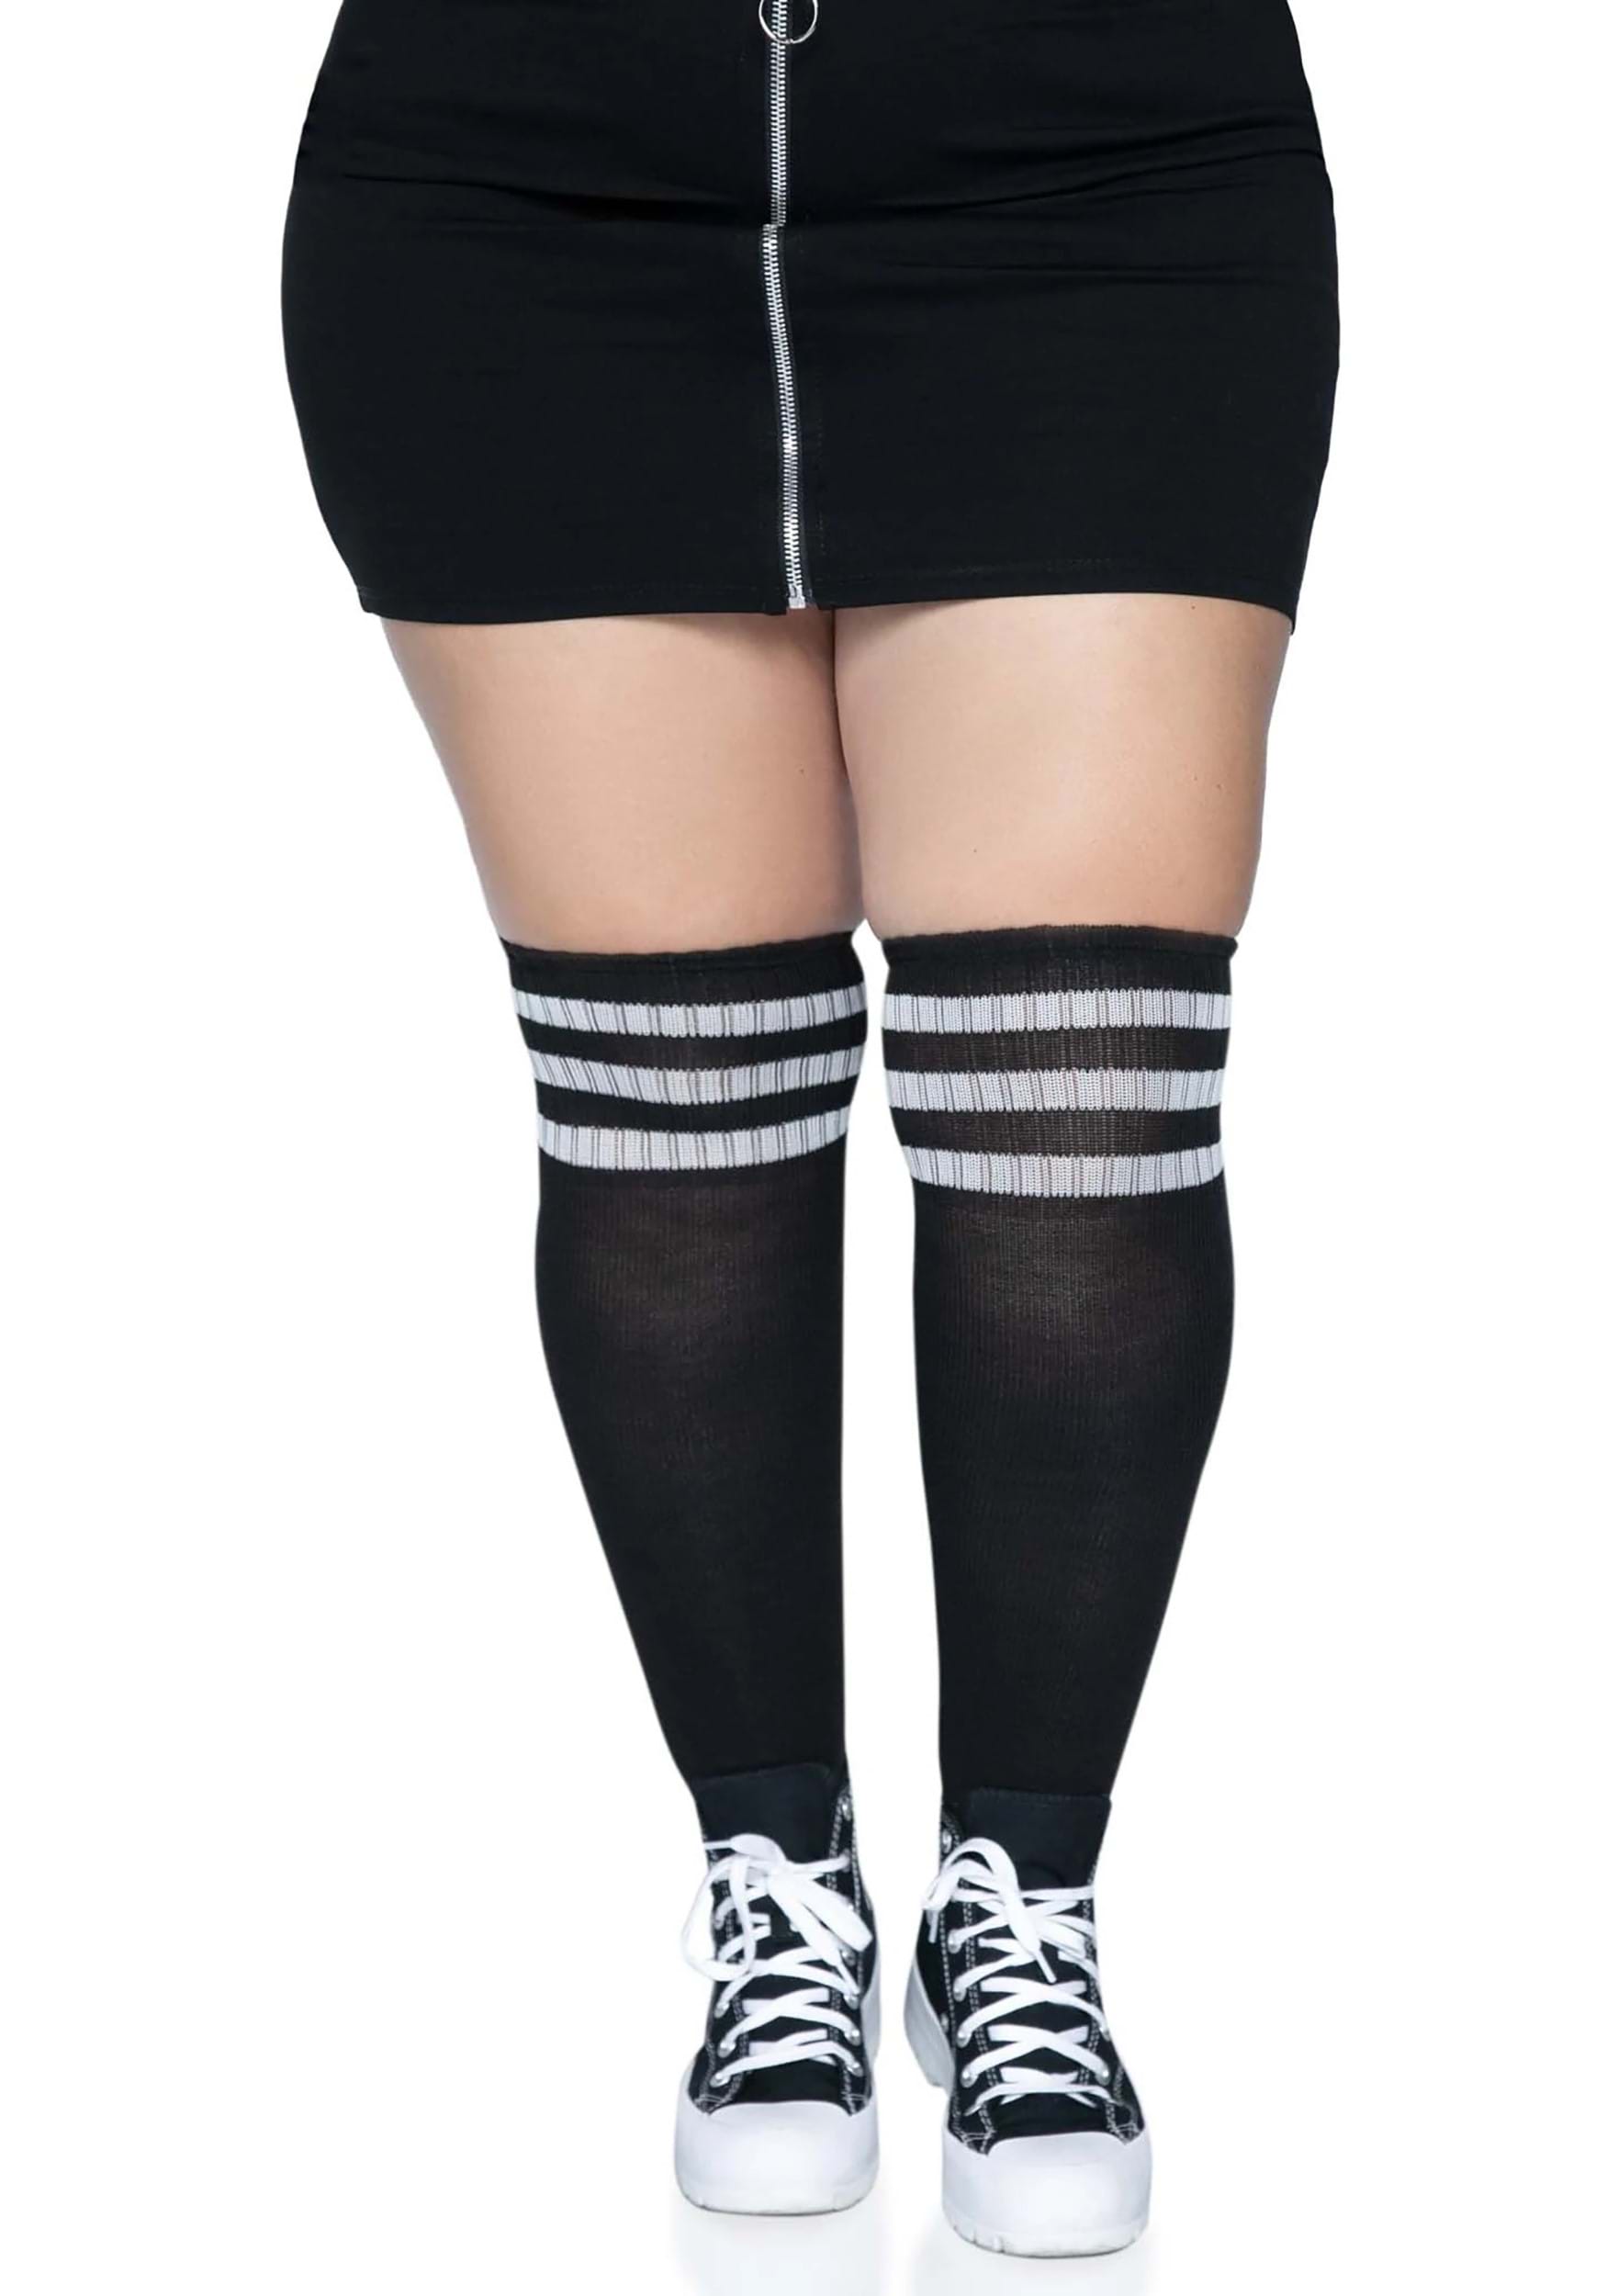 Athletic Thigh High Stockings Black/White